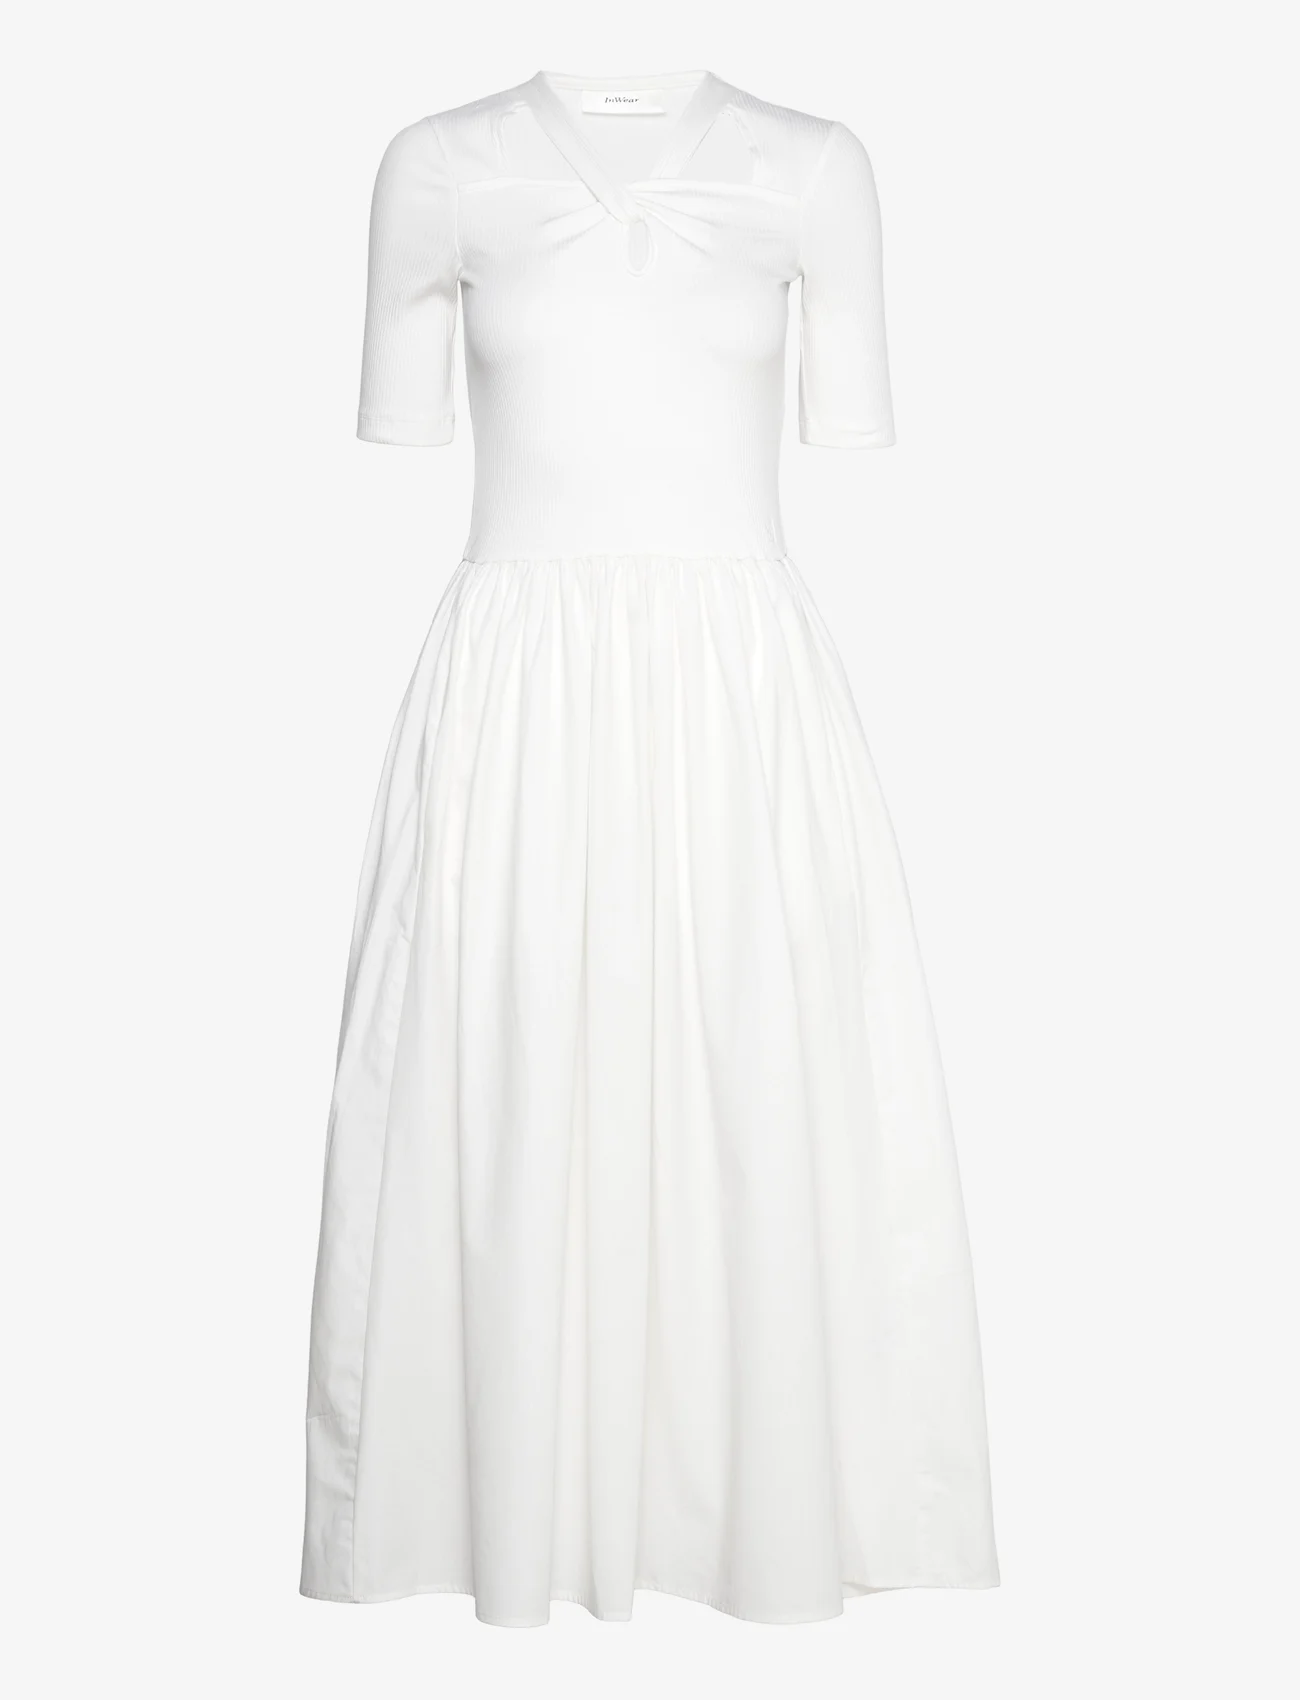 InWear - PukIW Dress - strikkjoler - whisper white - 0